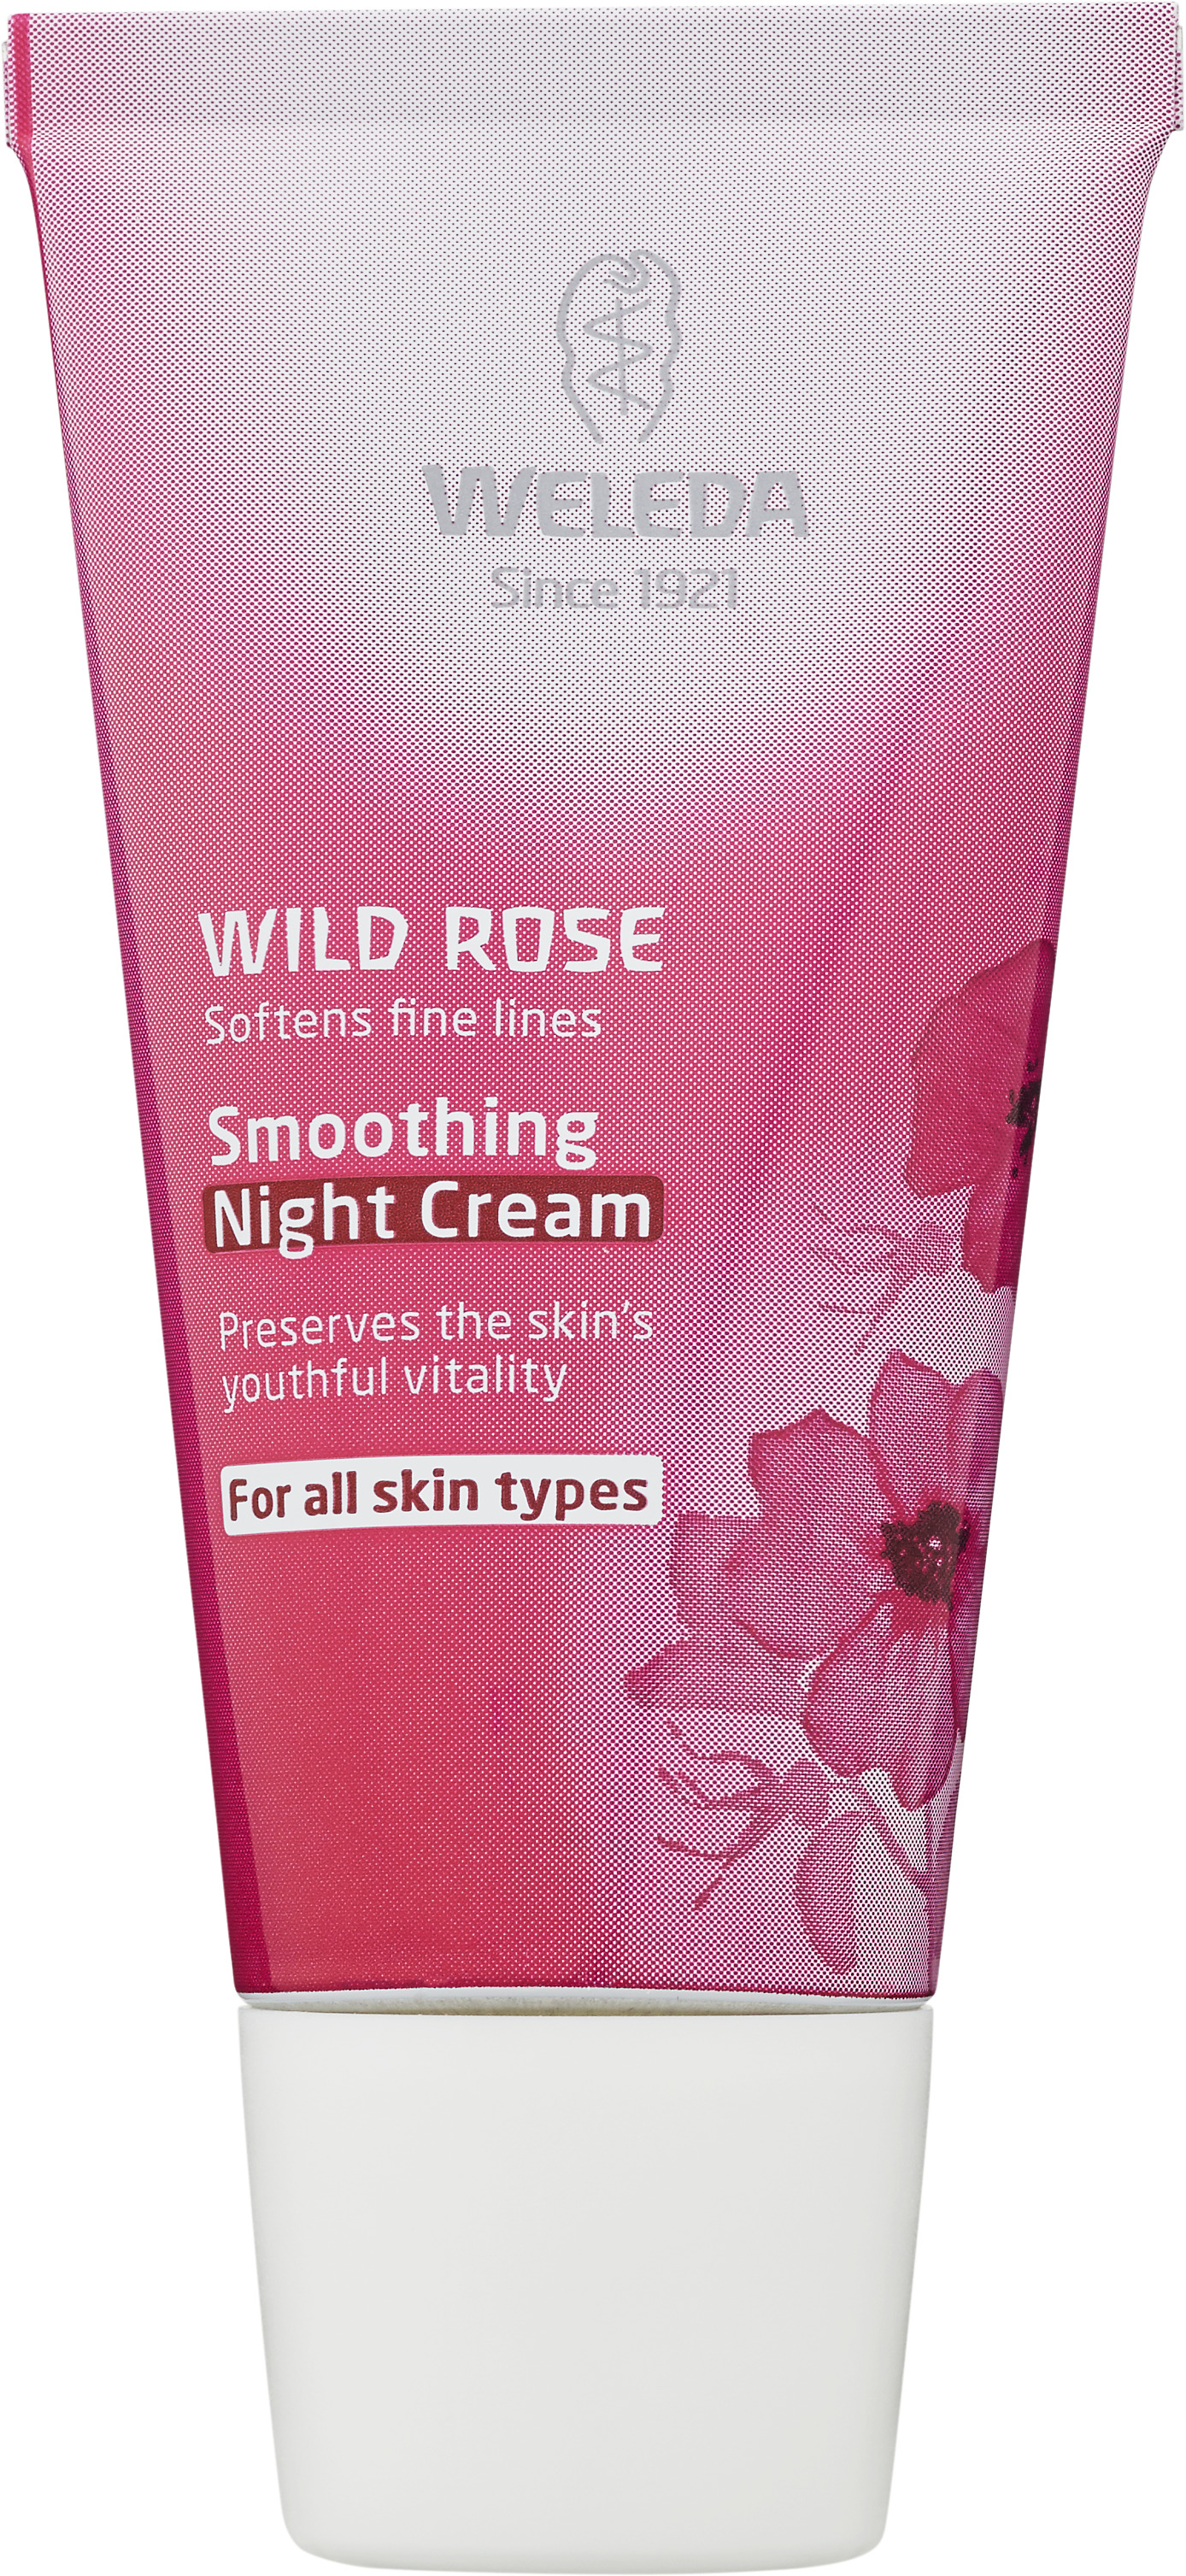 Weleda Wildrose Smoothing Night Cream 30 ml